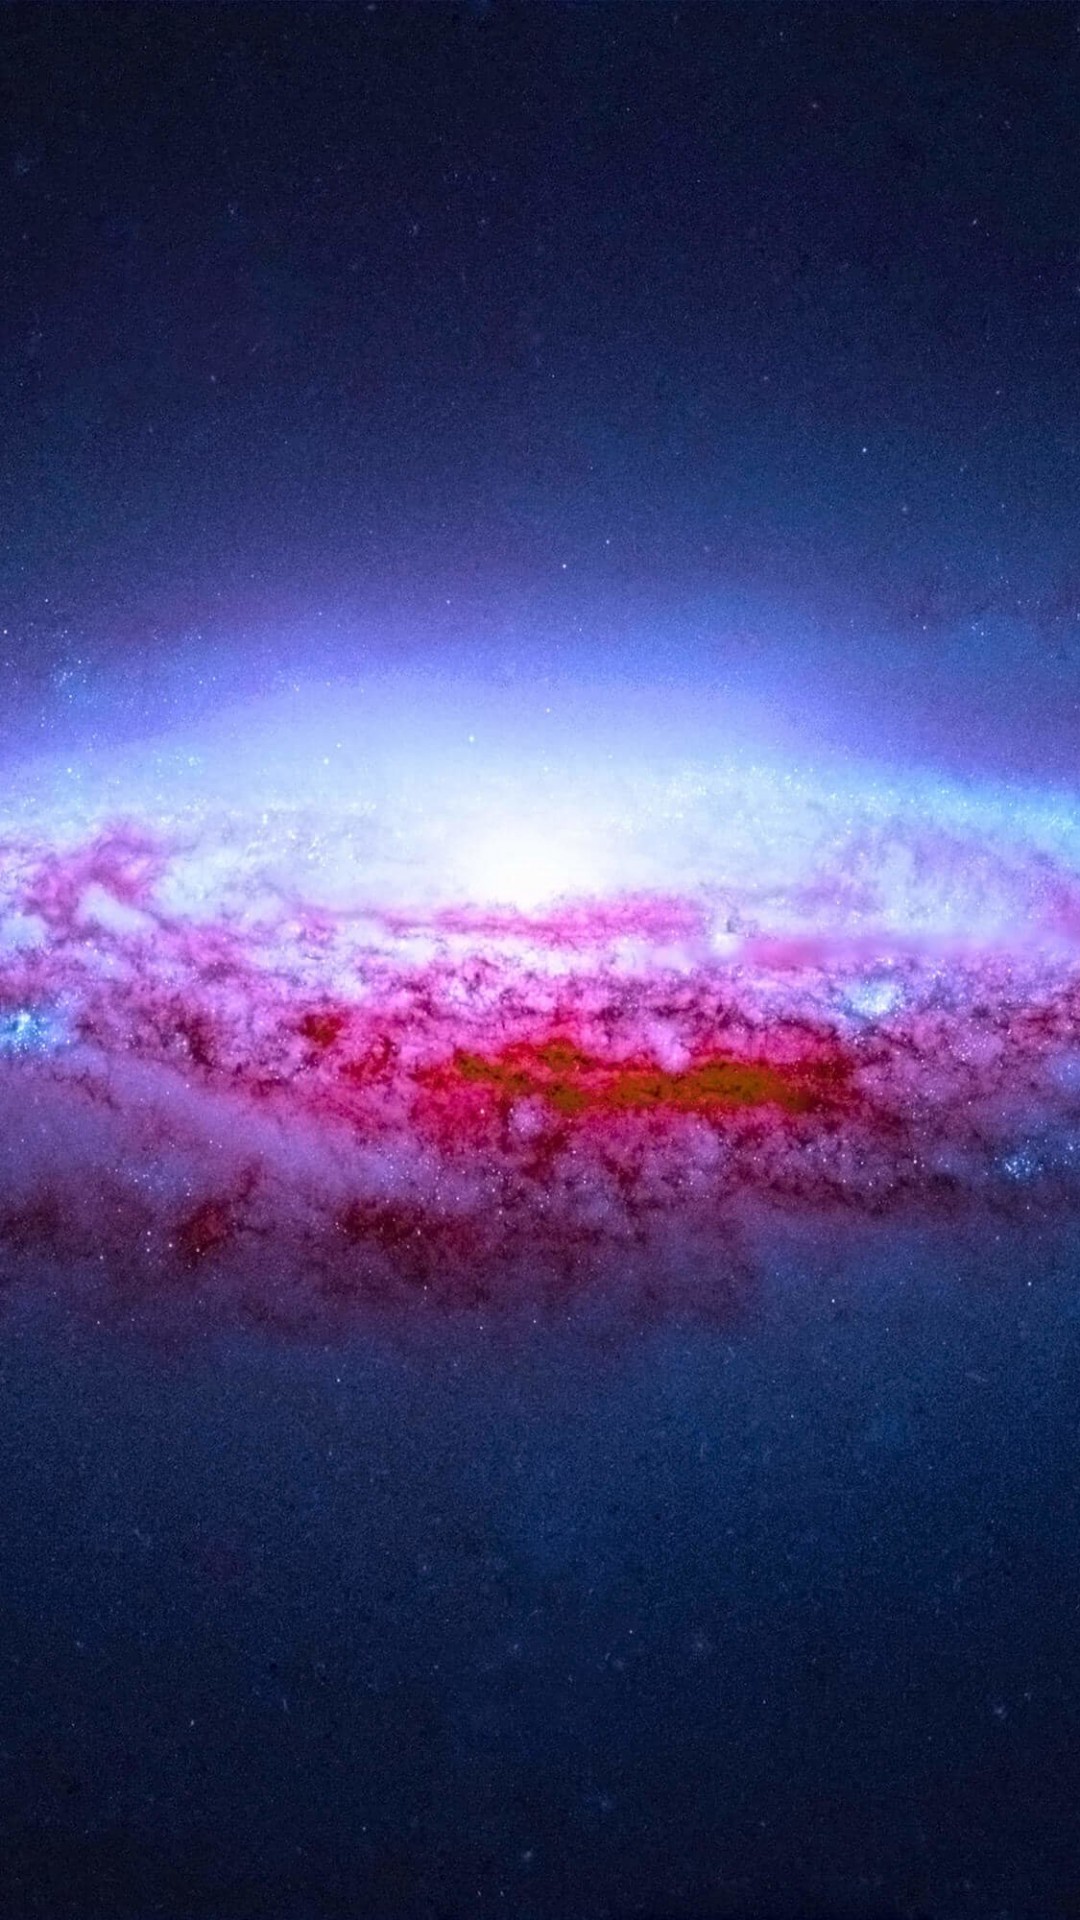 NGC 2683 Spiral Galaxy Wallpaper for SAMSUNG Galaxy S4